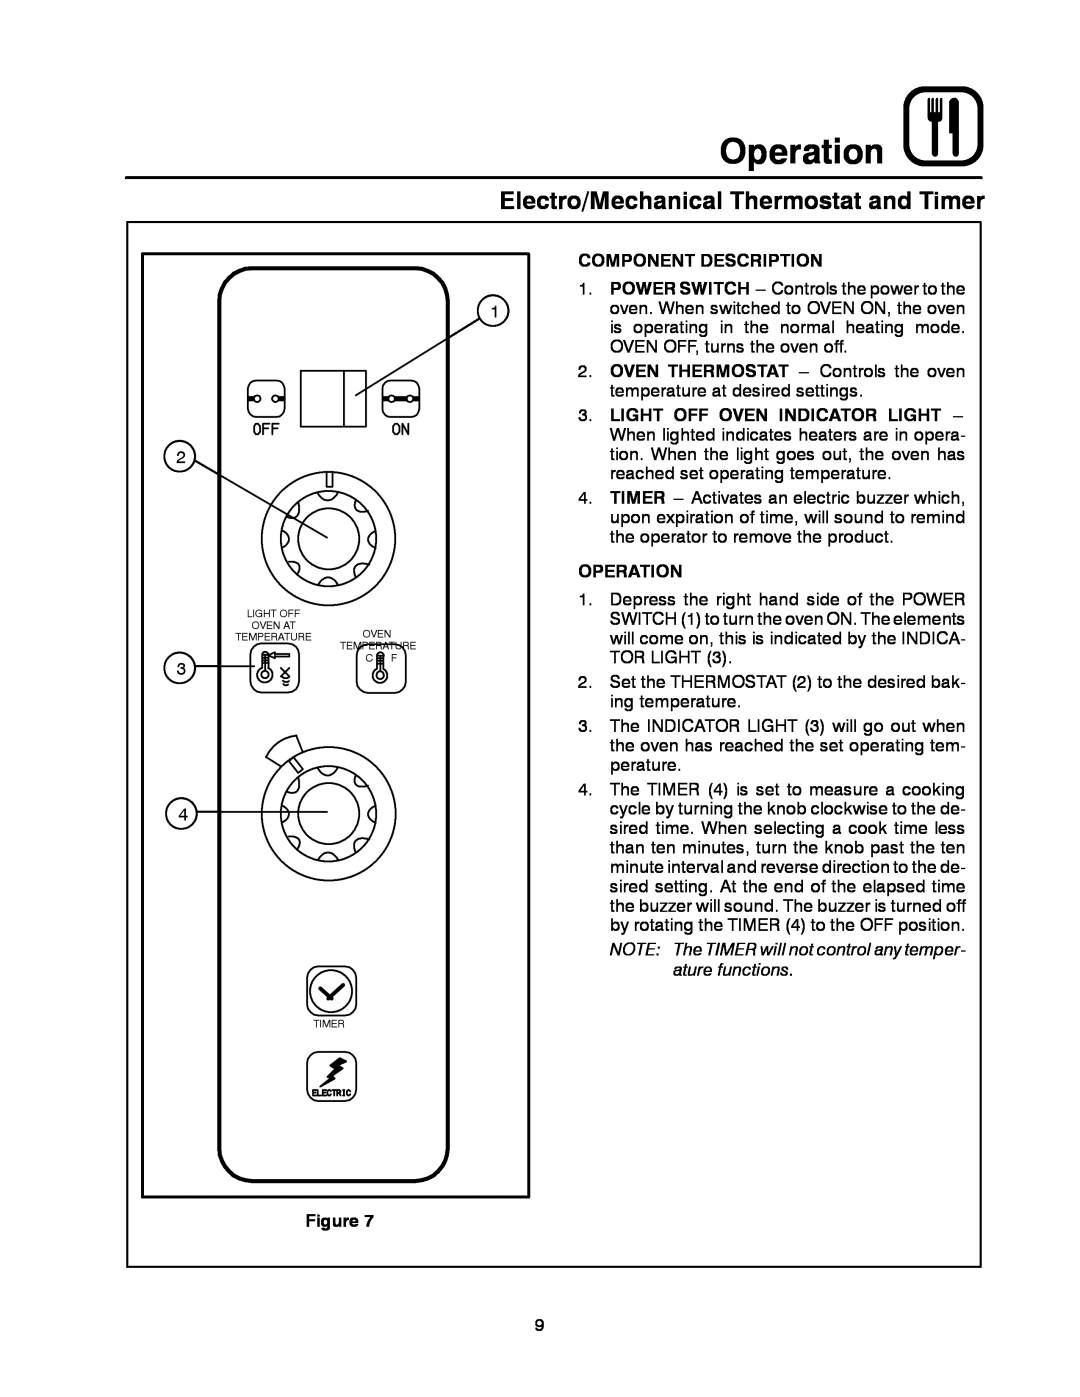 Blodgett 1400 SERIES manual Operation, Component Description, Light Off Oven Indicator Light 